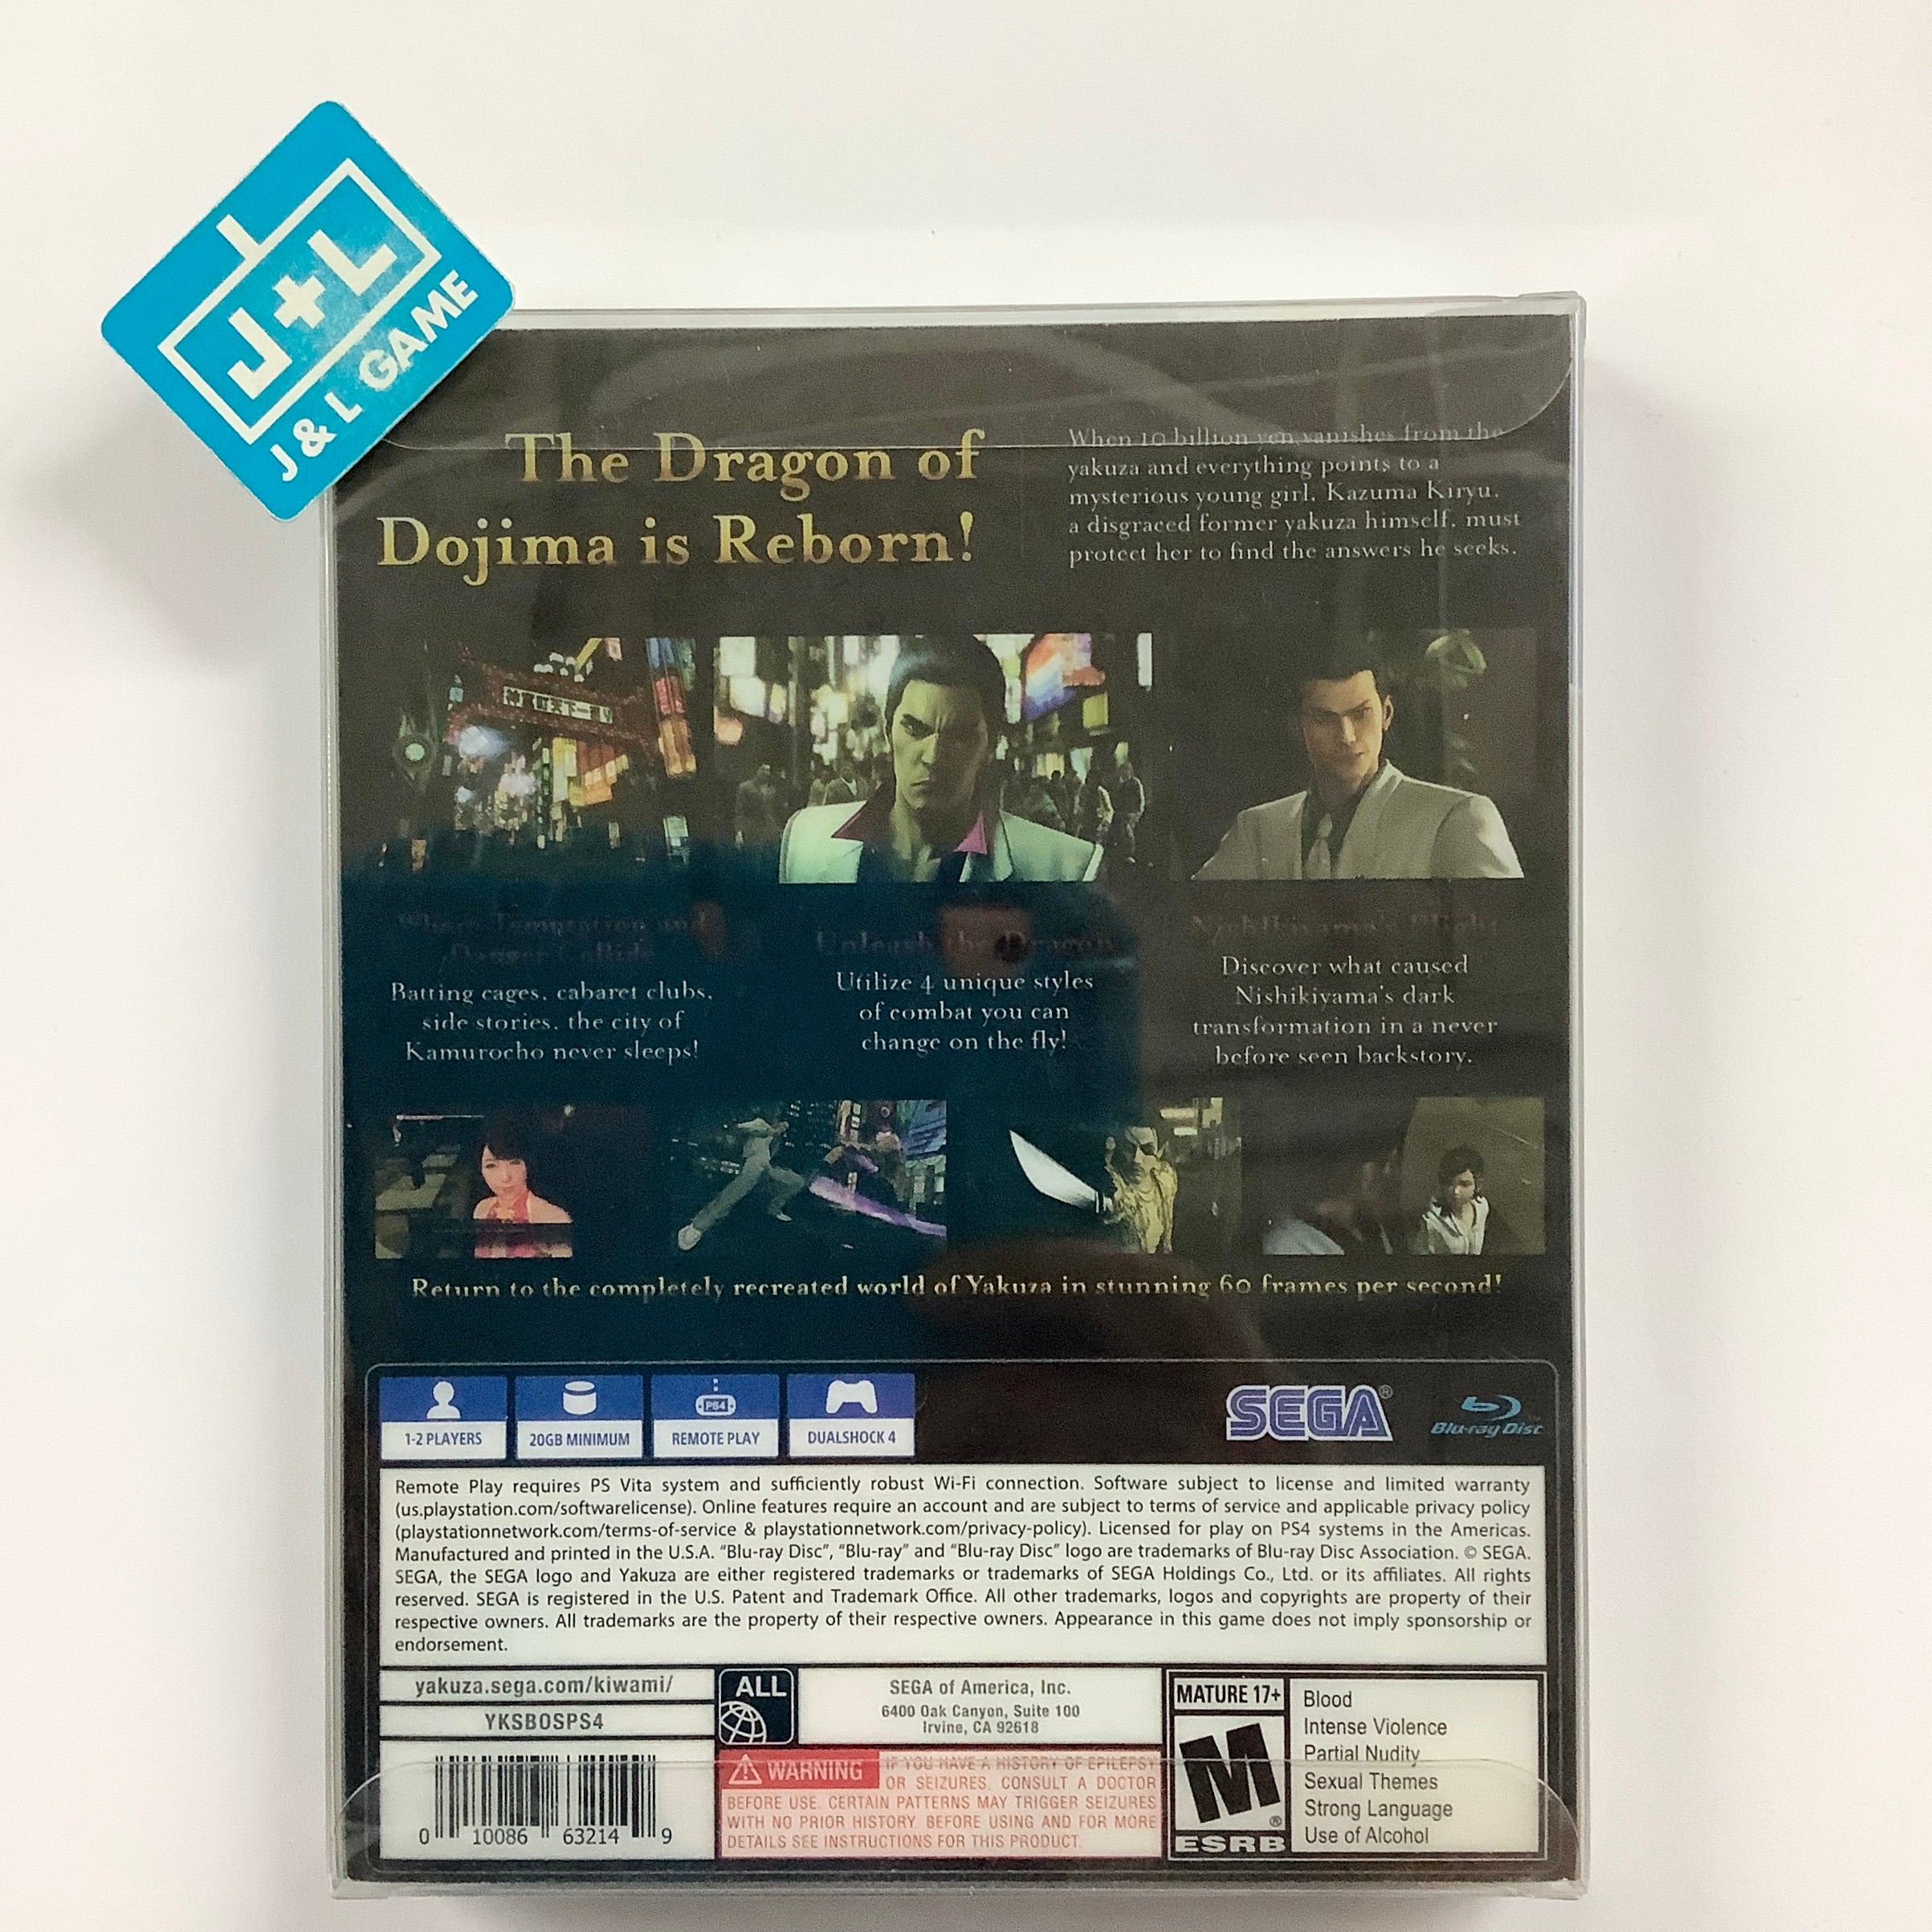 Yakuza Kiwami Steelbook Edition - (PS4) PlayStation 4 [Pre-Owned] Video Games SEGA   